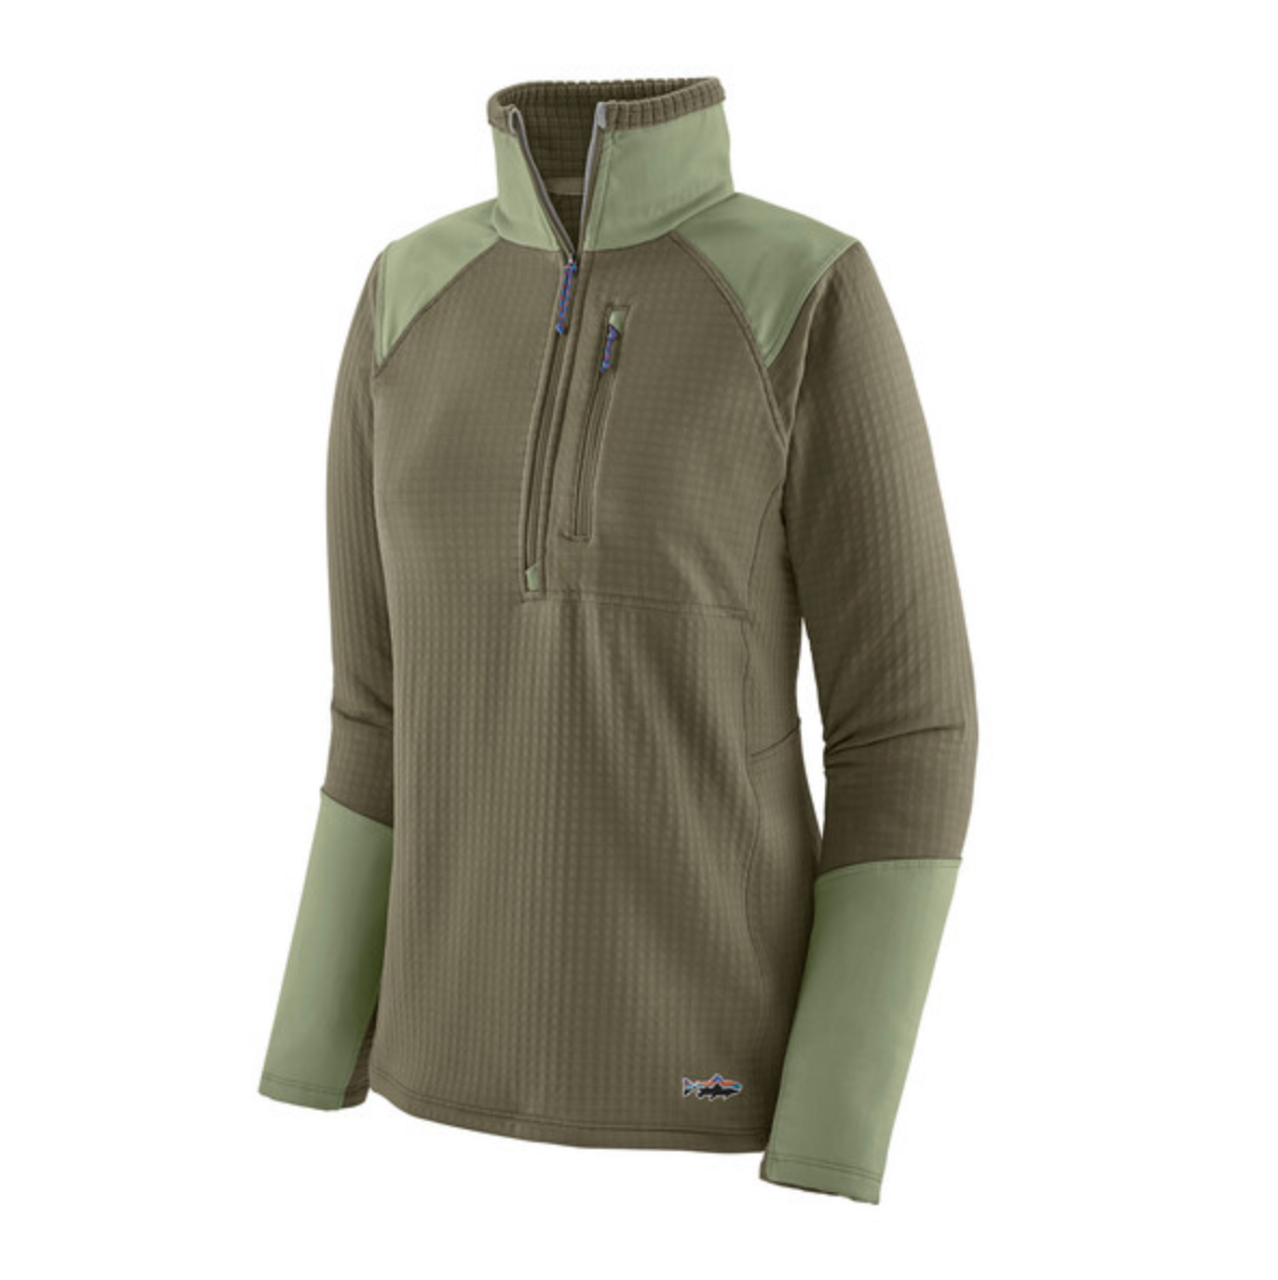 Patagonia Womens R1 Air Hemlock Green Full Zip Hooded Jacket: XL -  Tallington Lakes